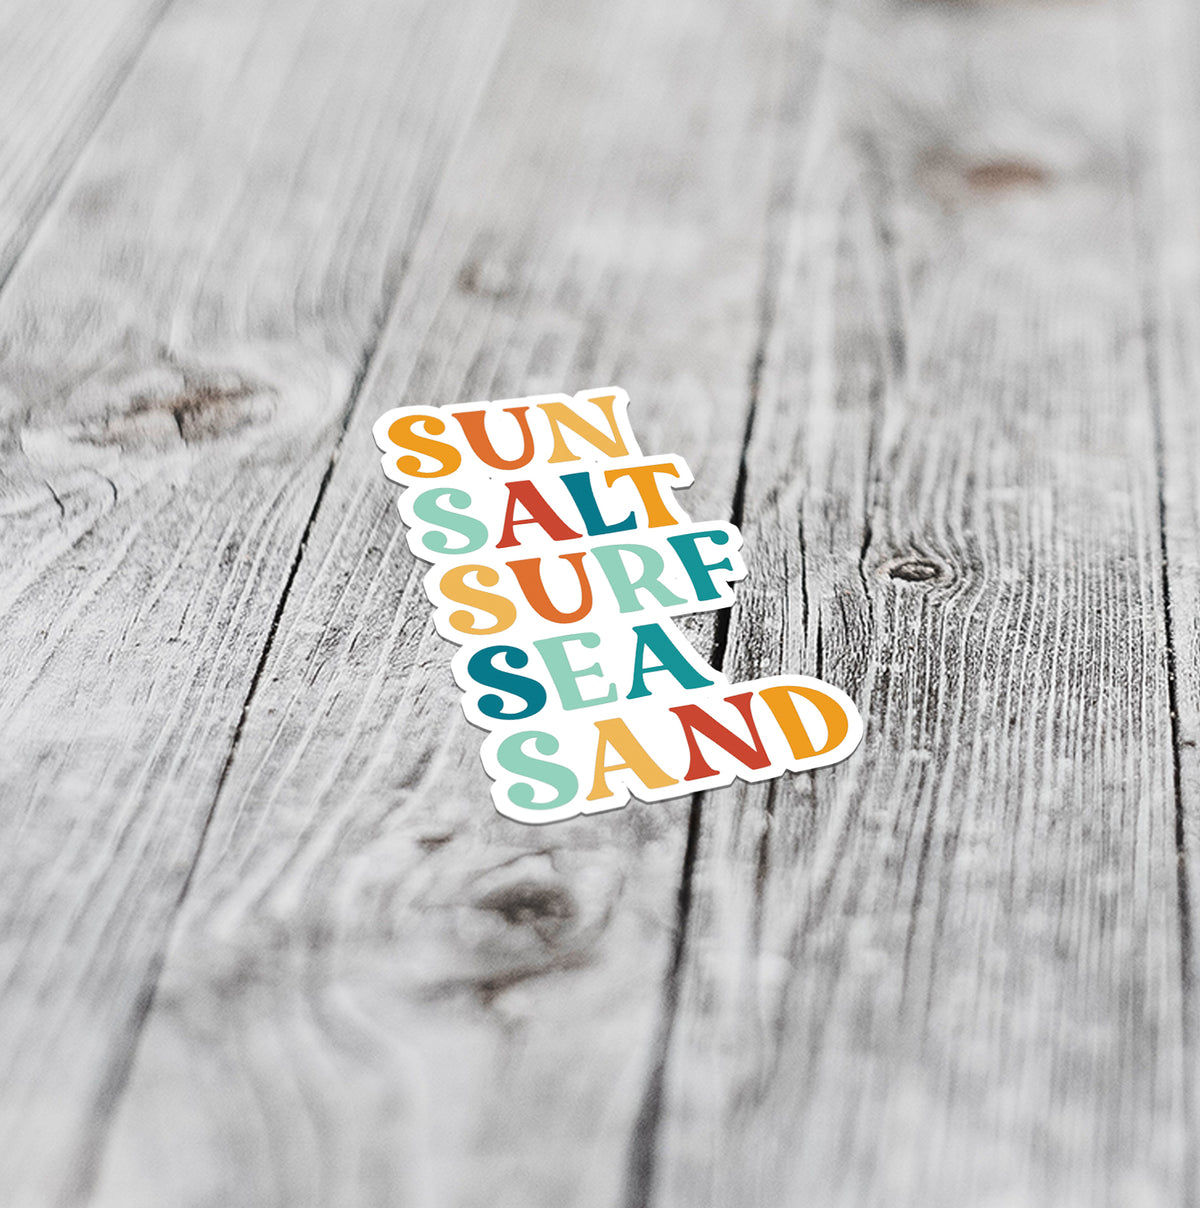 Sun, Salt, Surf, Sea, Sand | Greeting Card